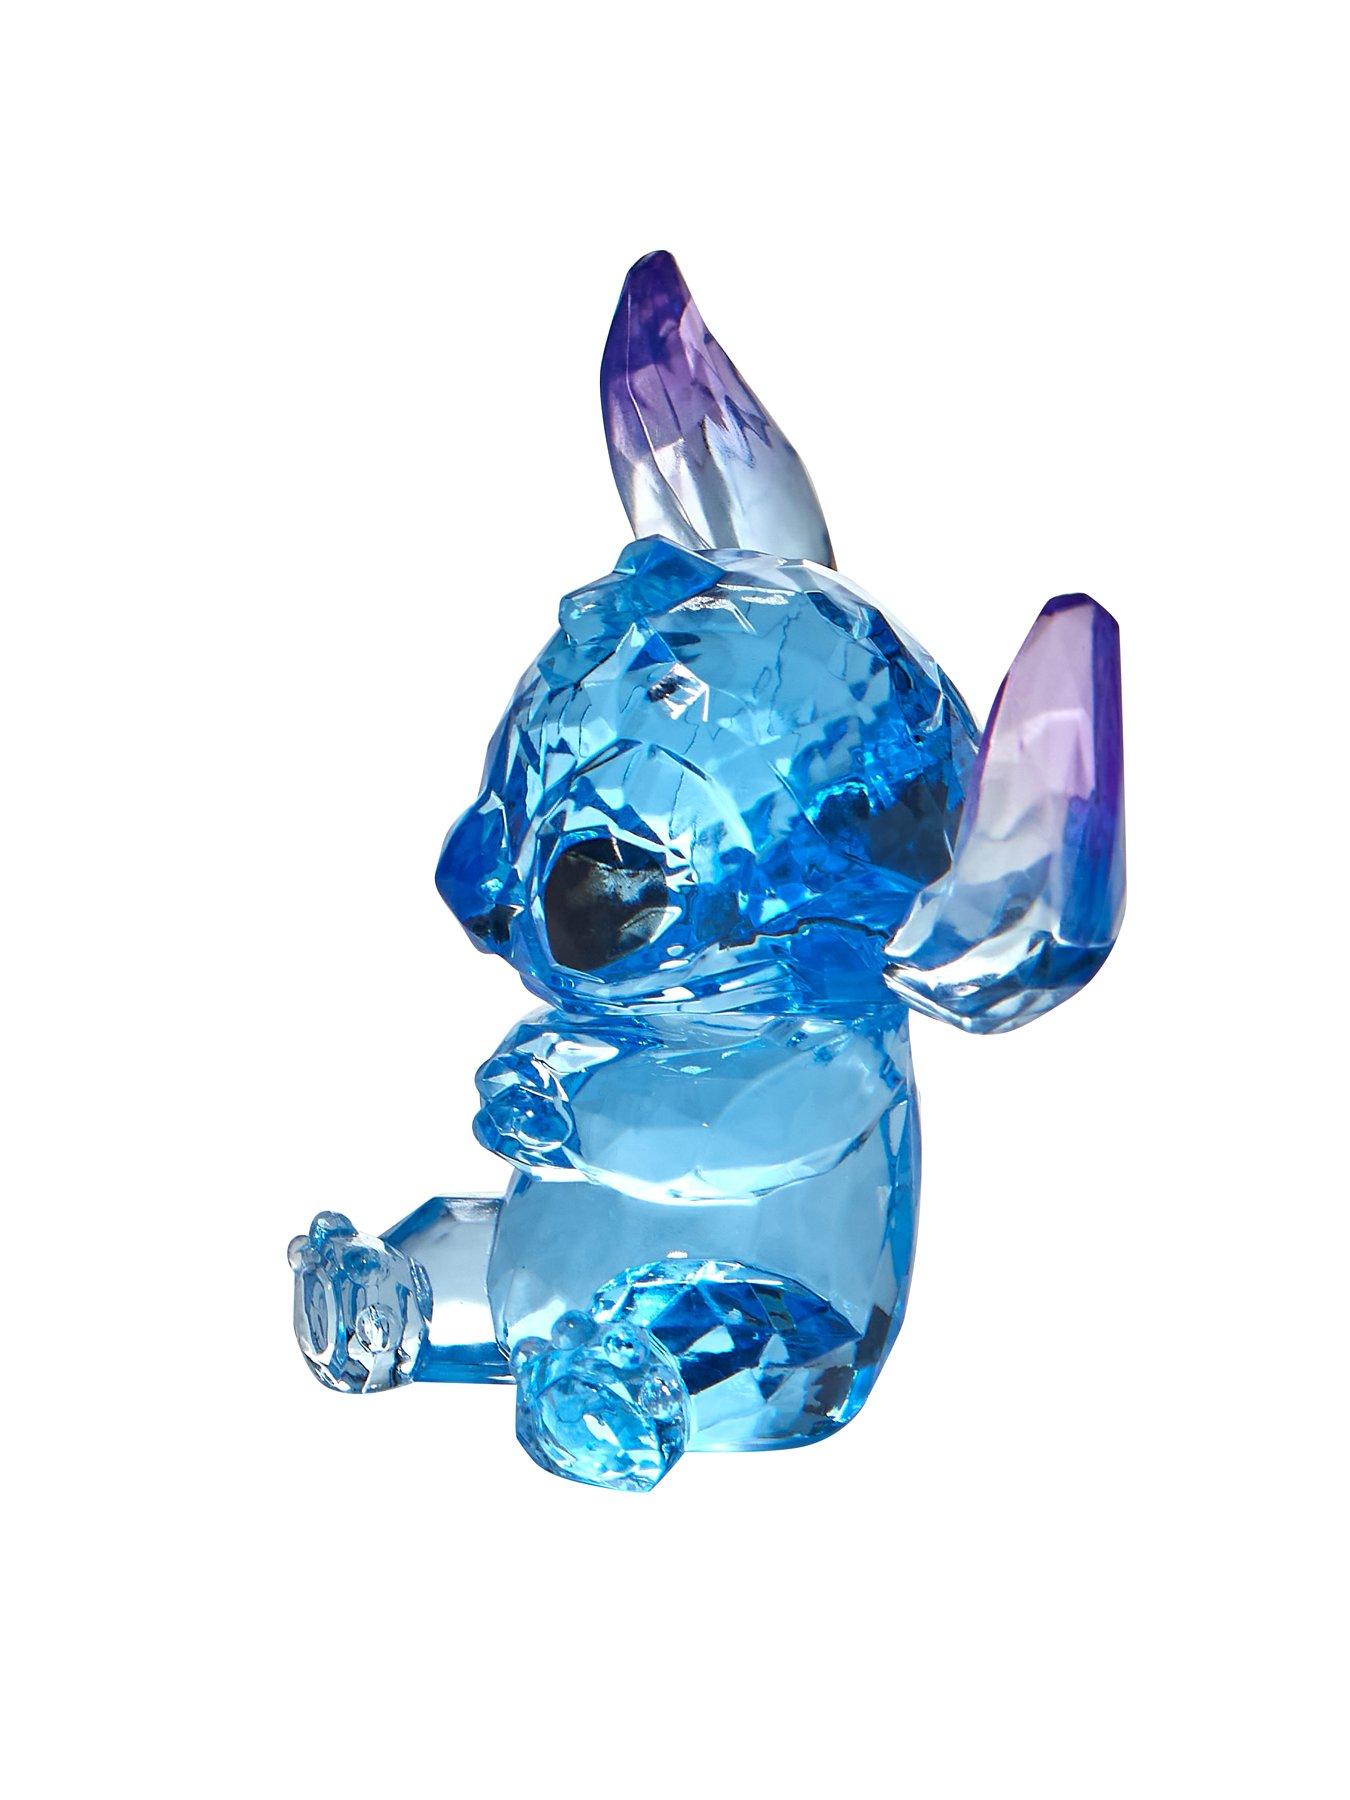 Hanayama Crystal Gallery 3D Puzzle 43 pieces Disney Stitch